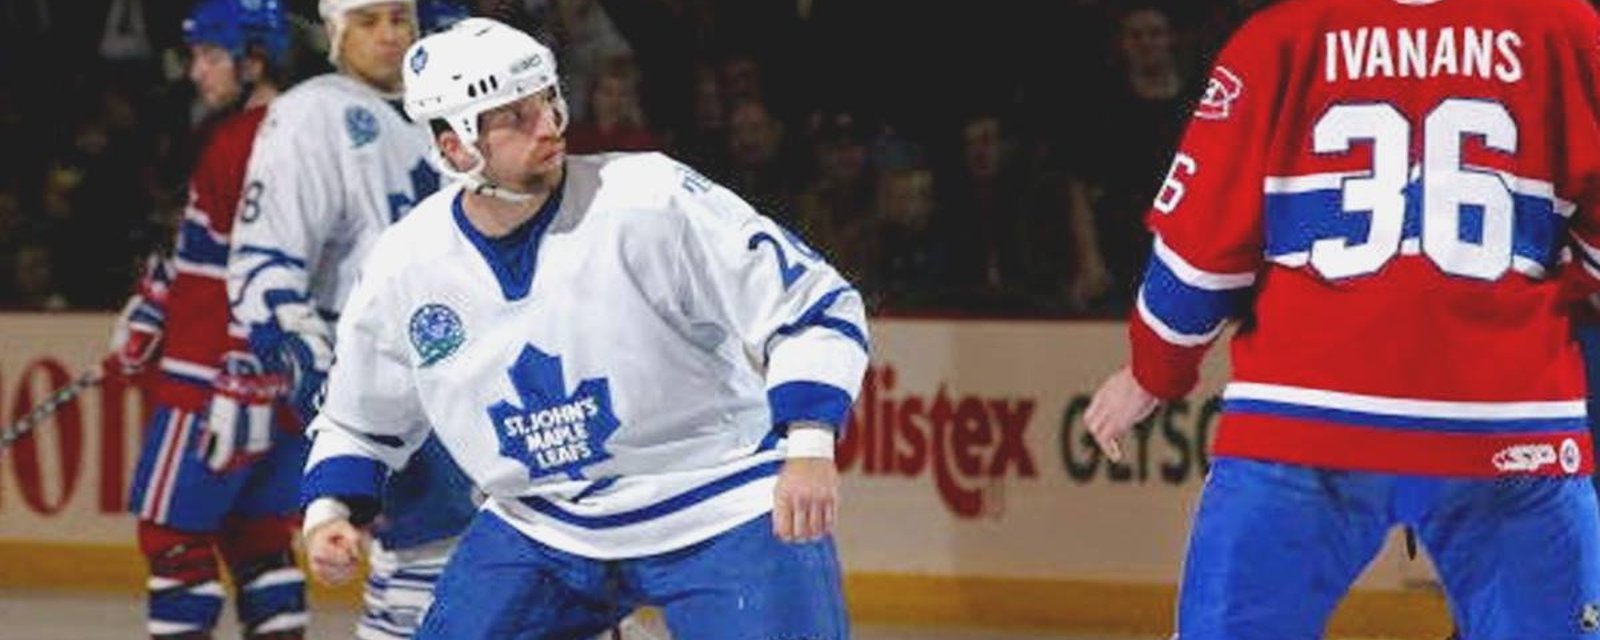 Former Maple Leafs enforcer has a major career change